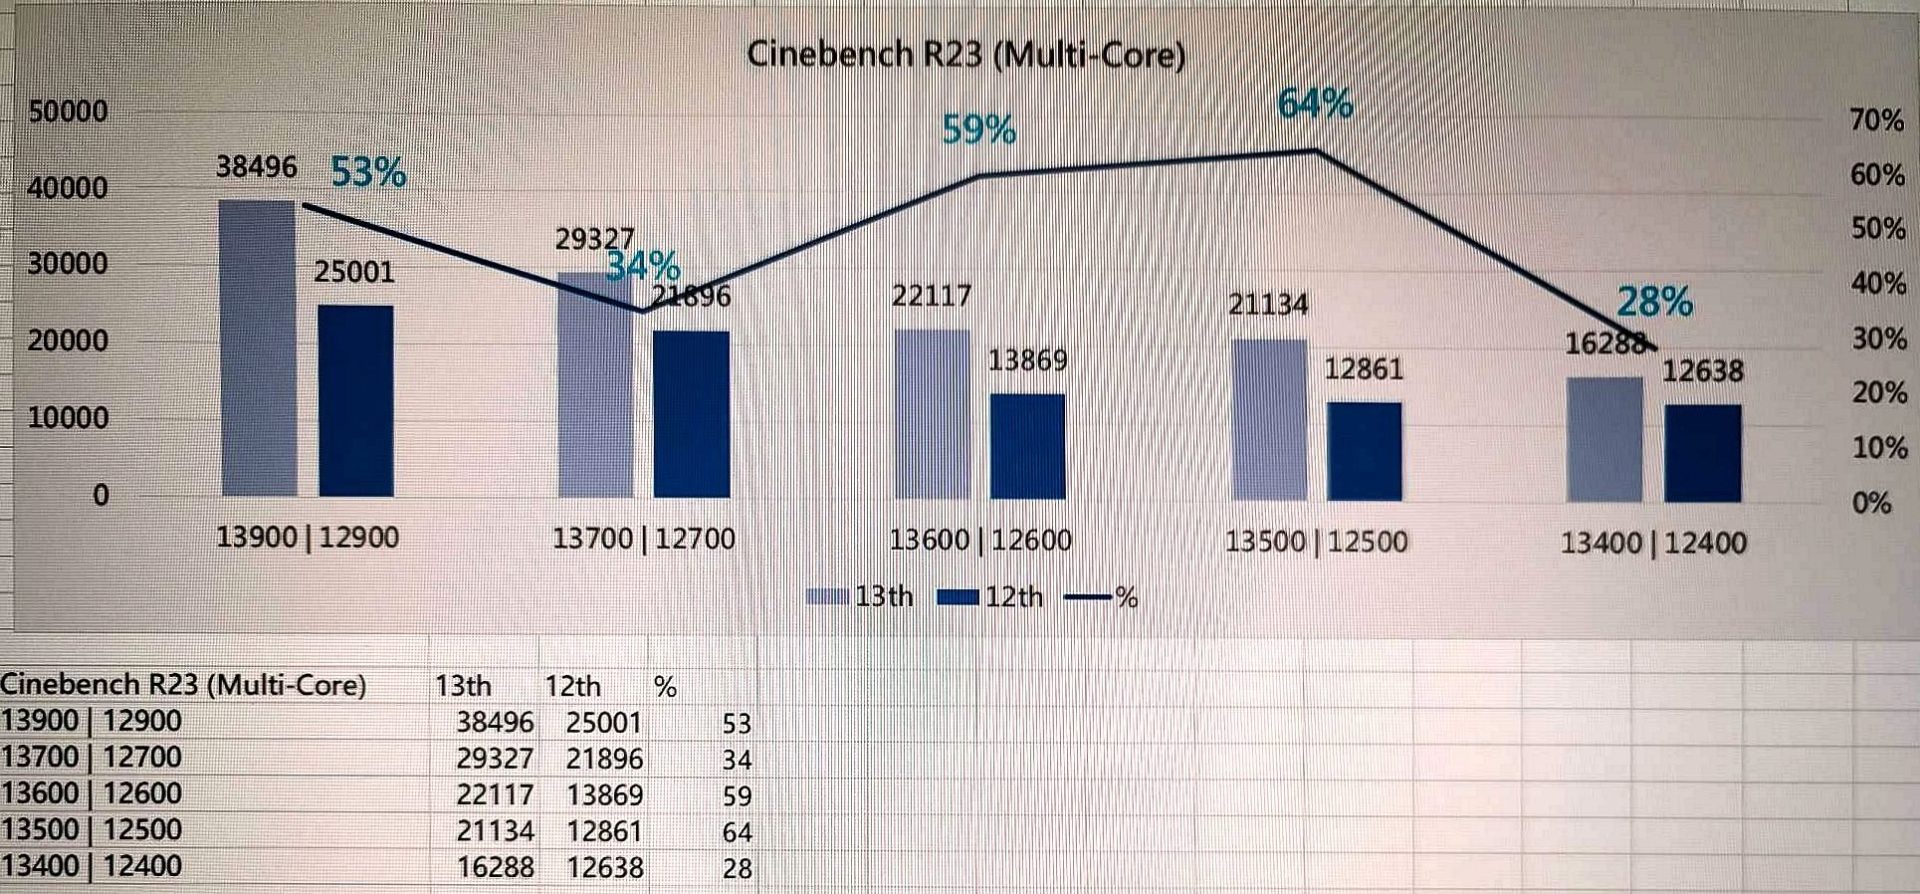 Multi-core performance score of 13th generation Intel processors in Cinebench